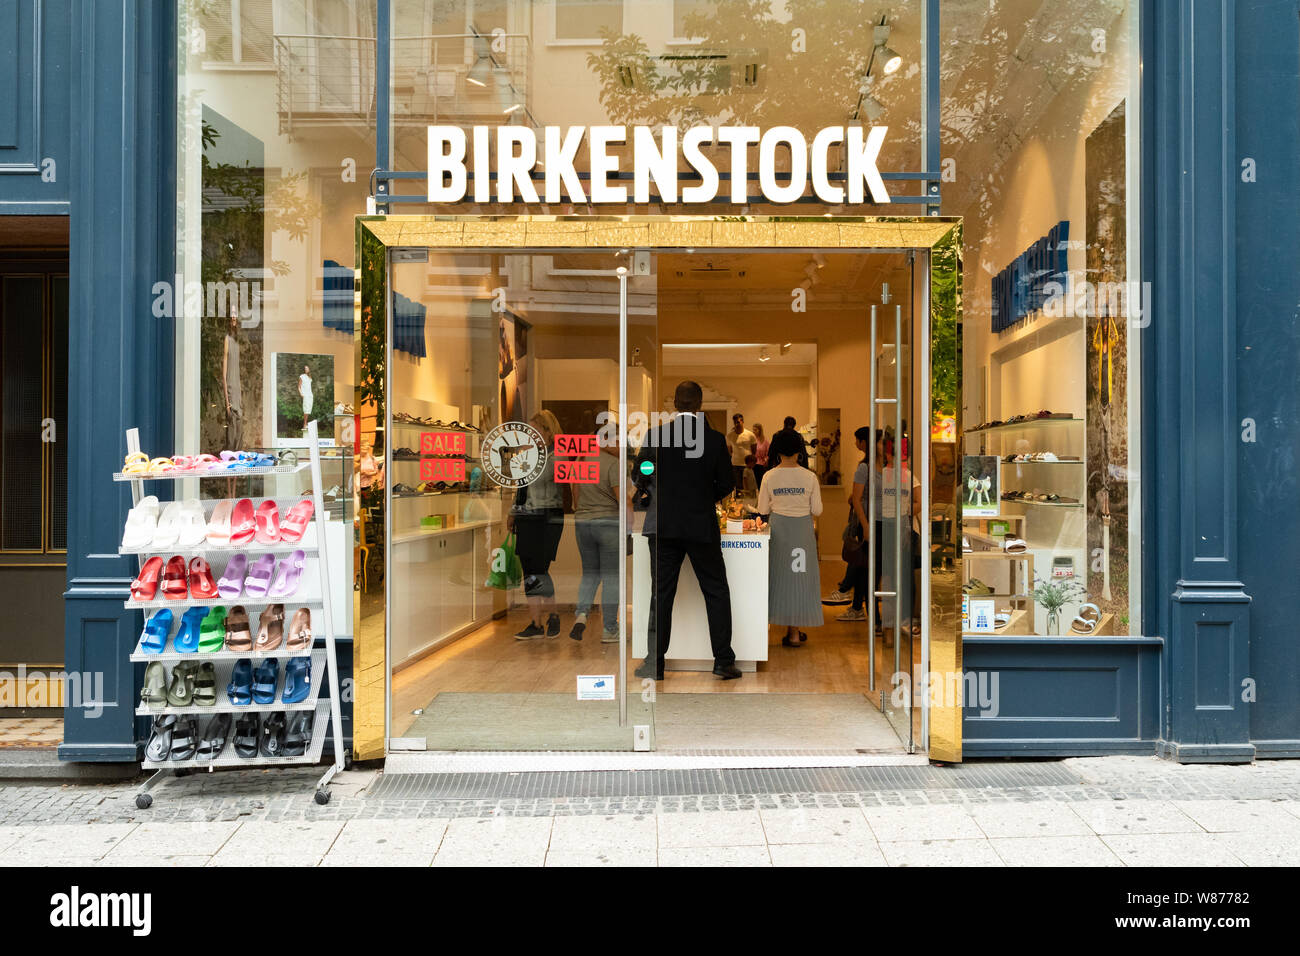 Birkenstock shop, Frankfurt am Main, Deutschland, Europa Stockfotografie -  Alamy